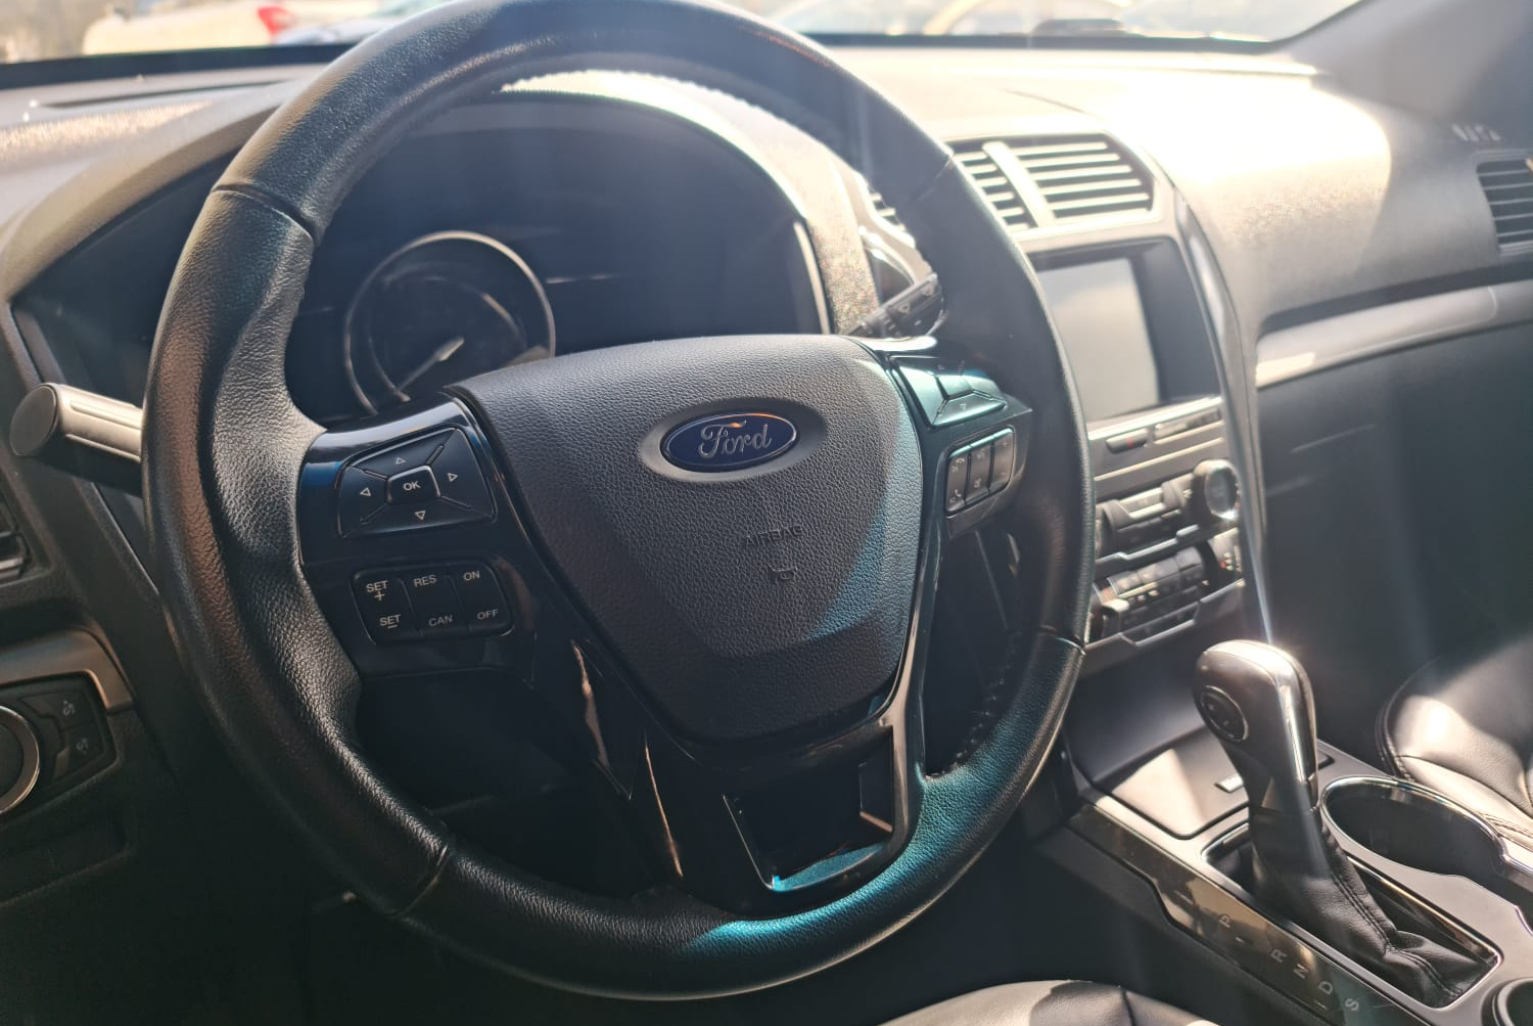 Ford Explorer 2019 Automático color Gris, Imagen #7